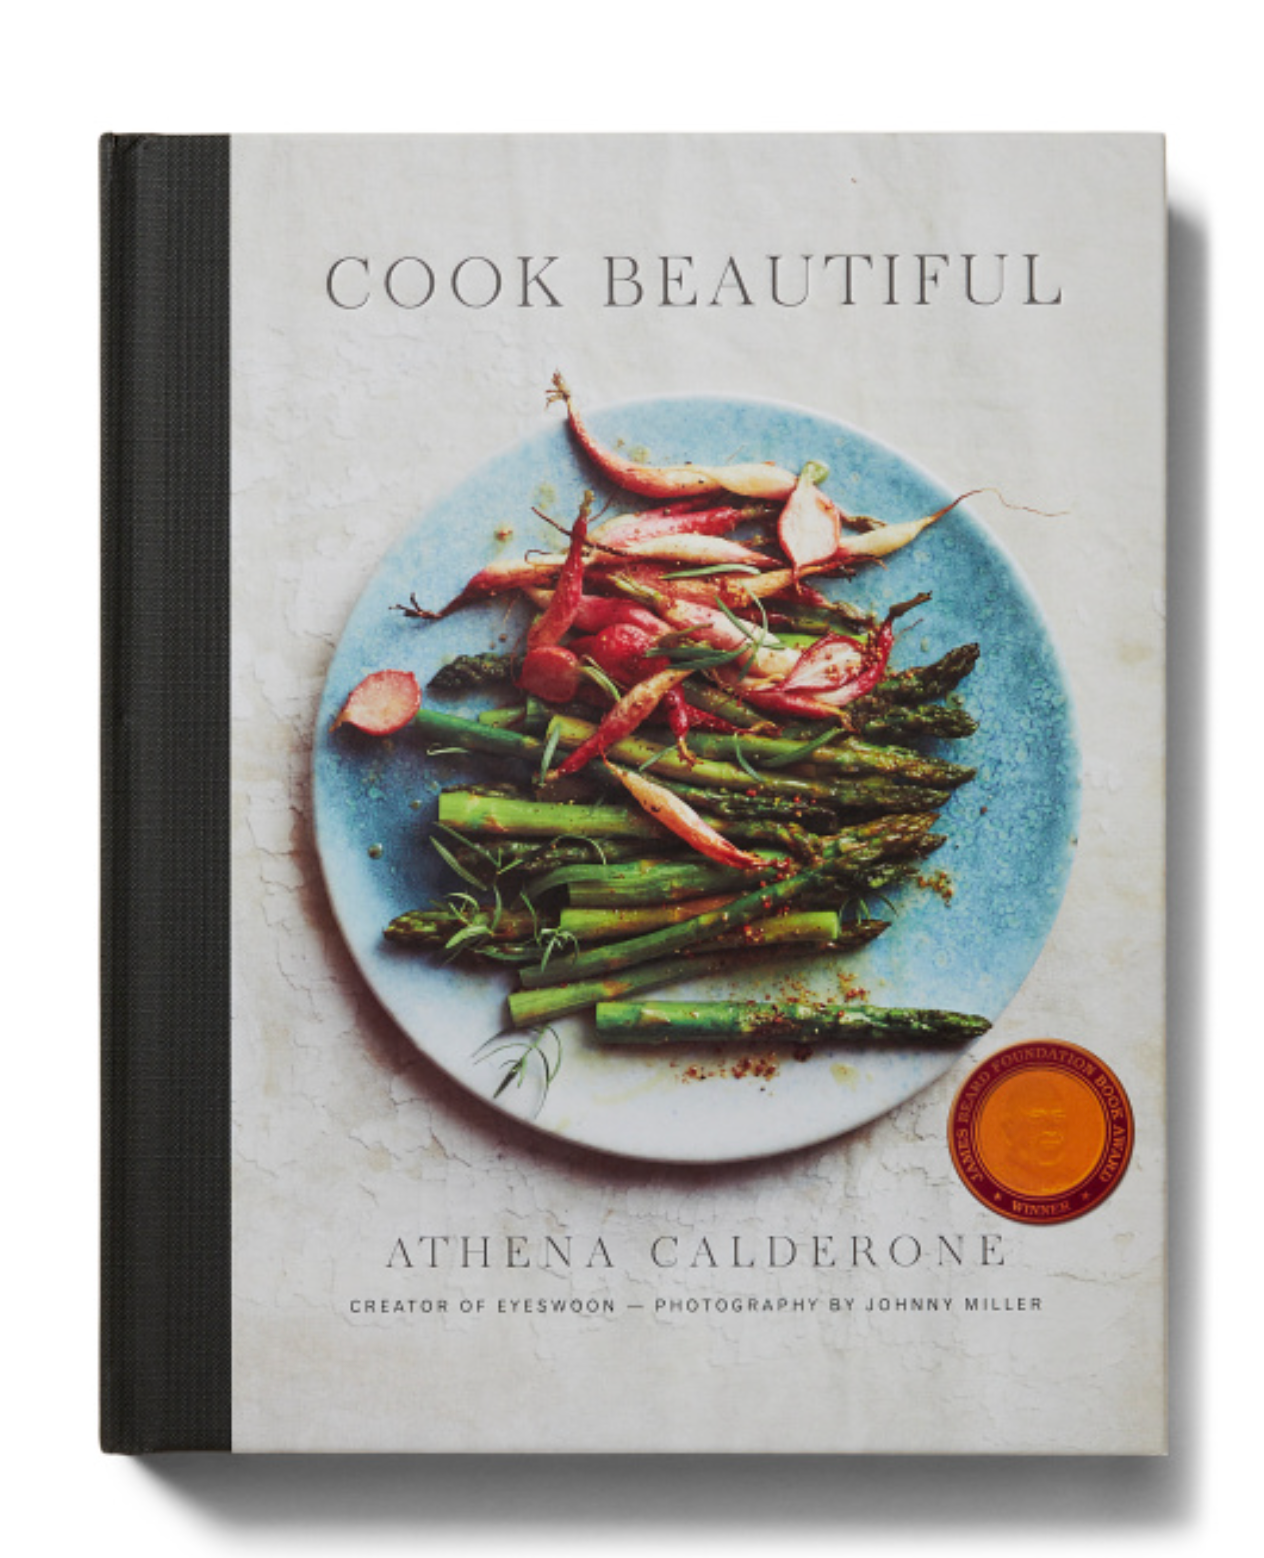 Cook Beautiful: Athena Calderone